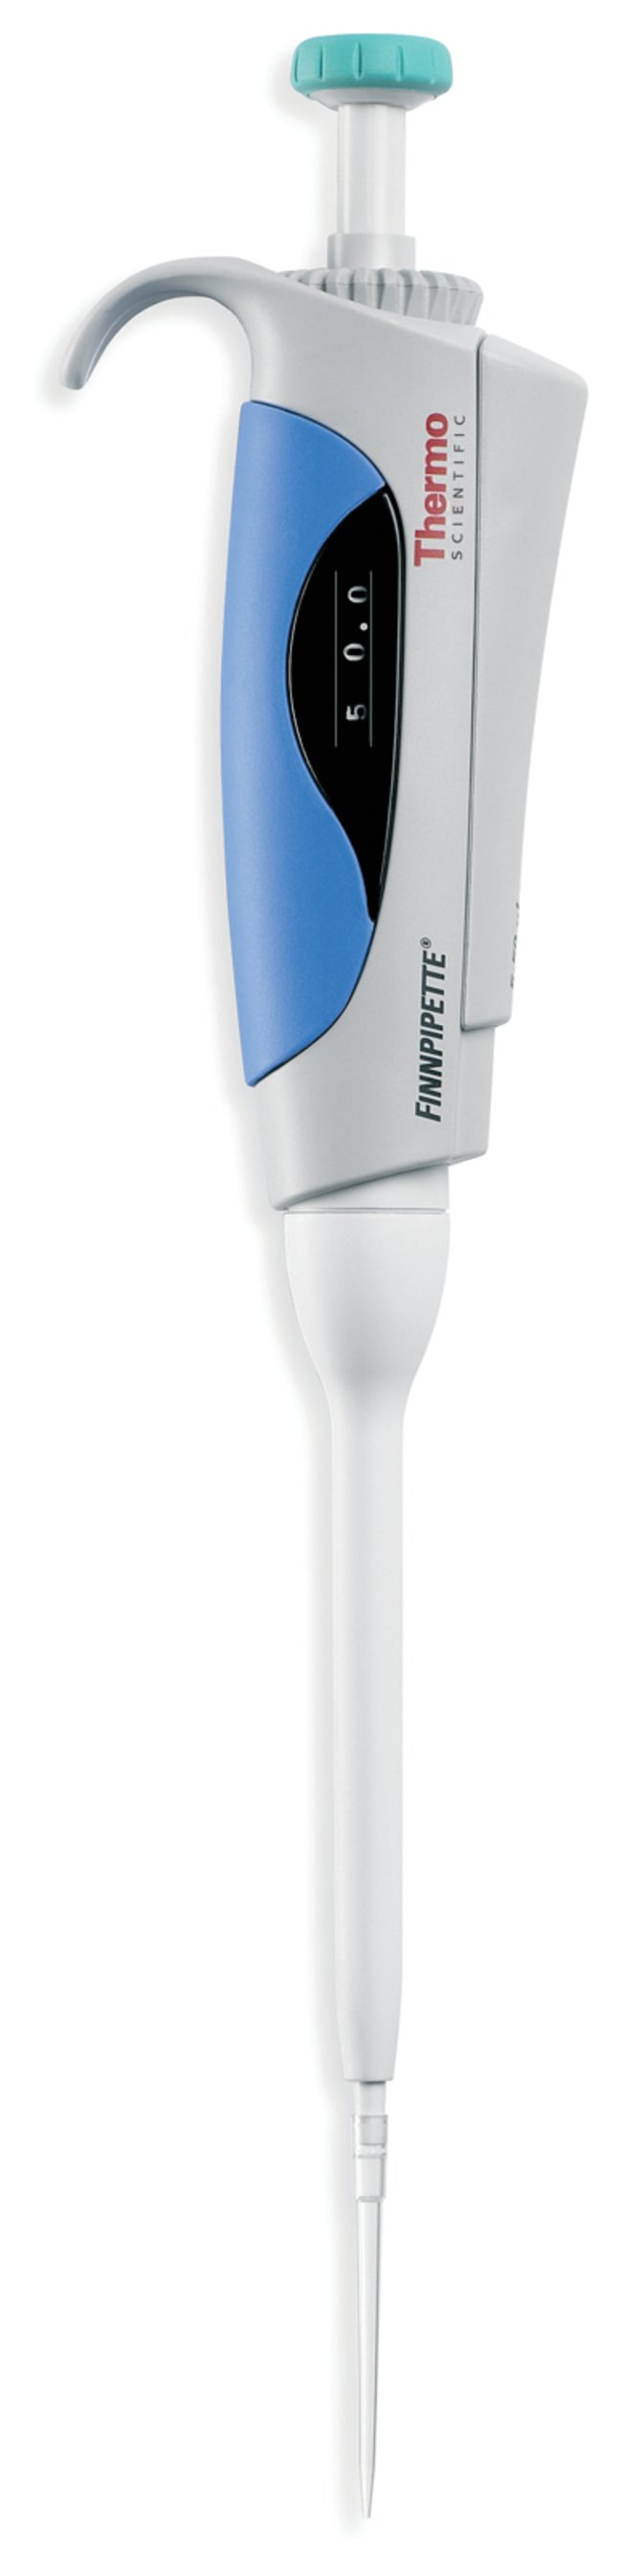 Finnpipette™ Focus Short可变容量移液器